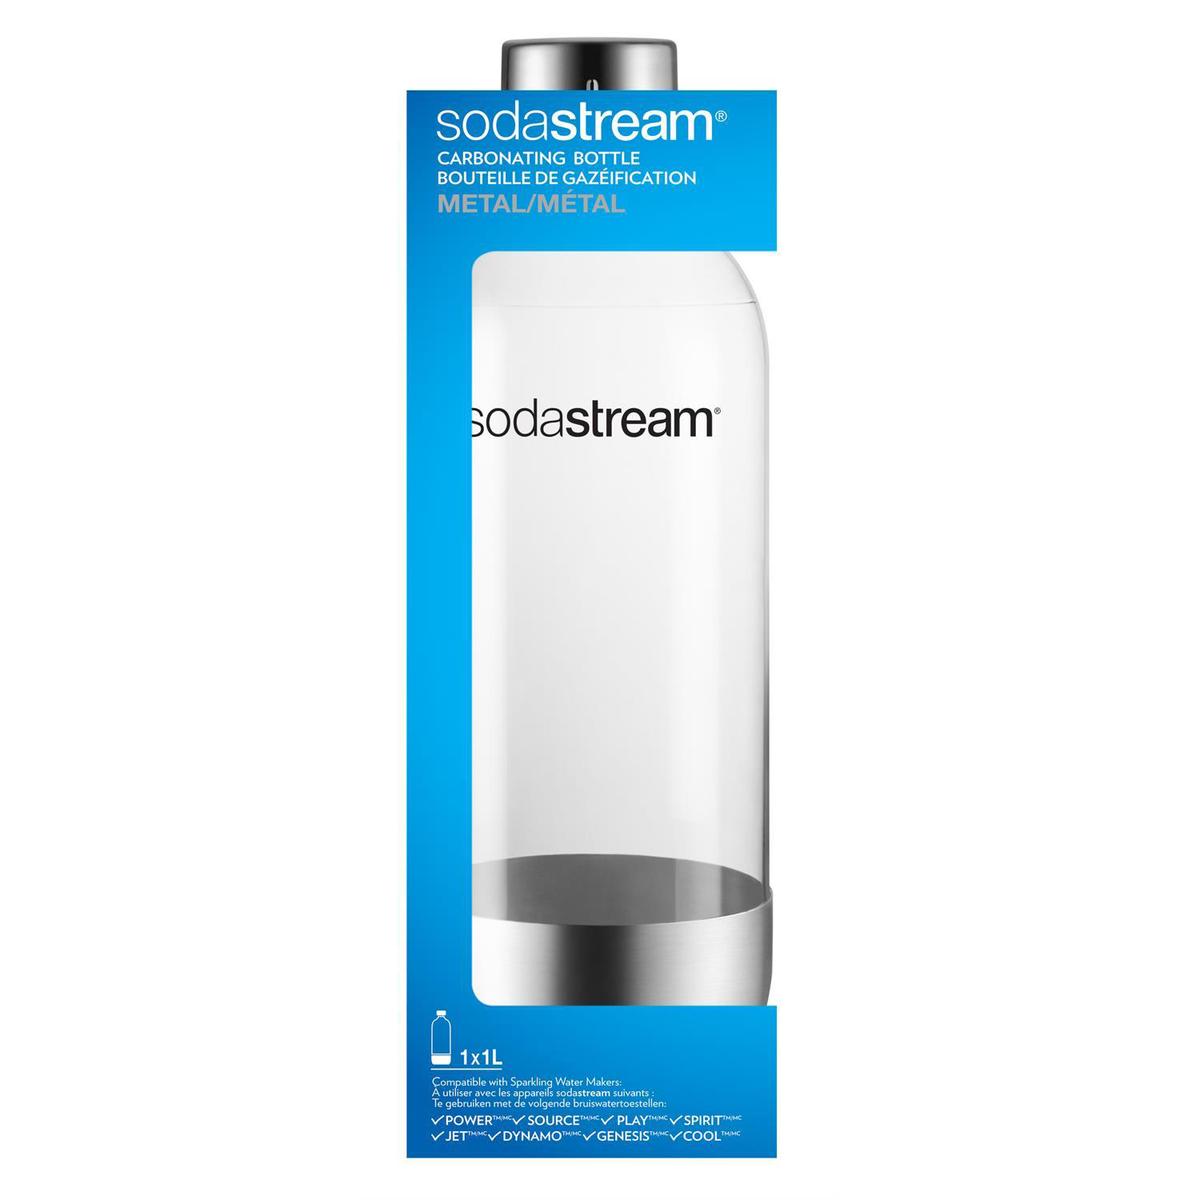 Échangez votre recharge de gaz SodaStream – Sodastream France